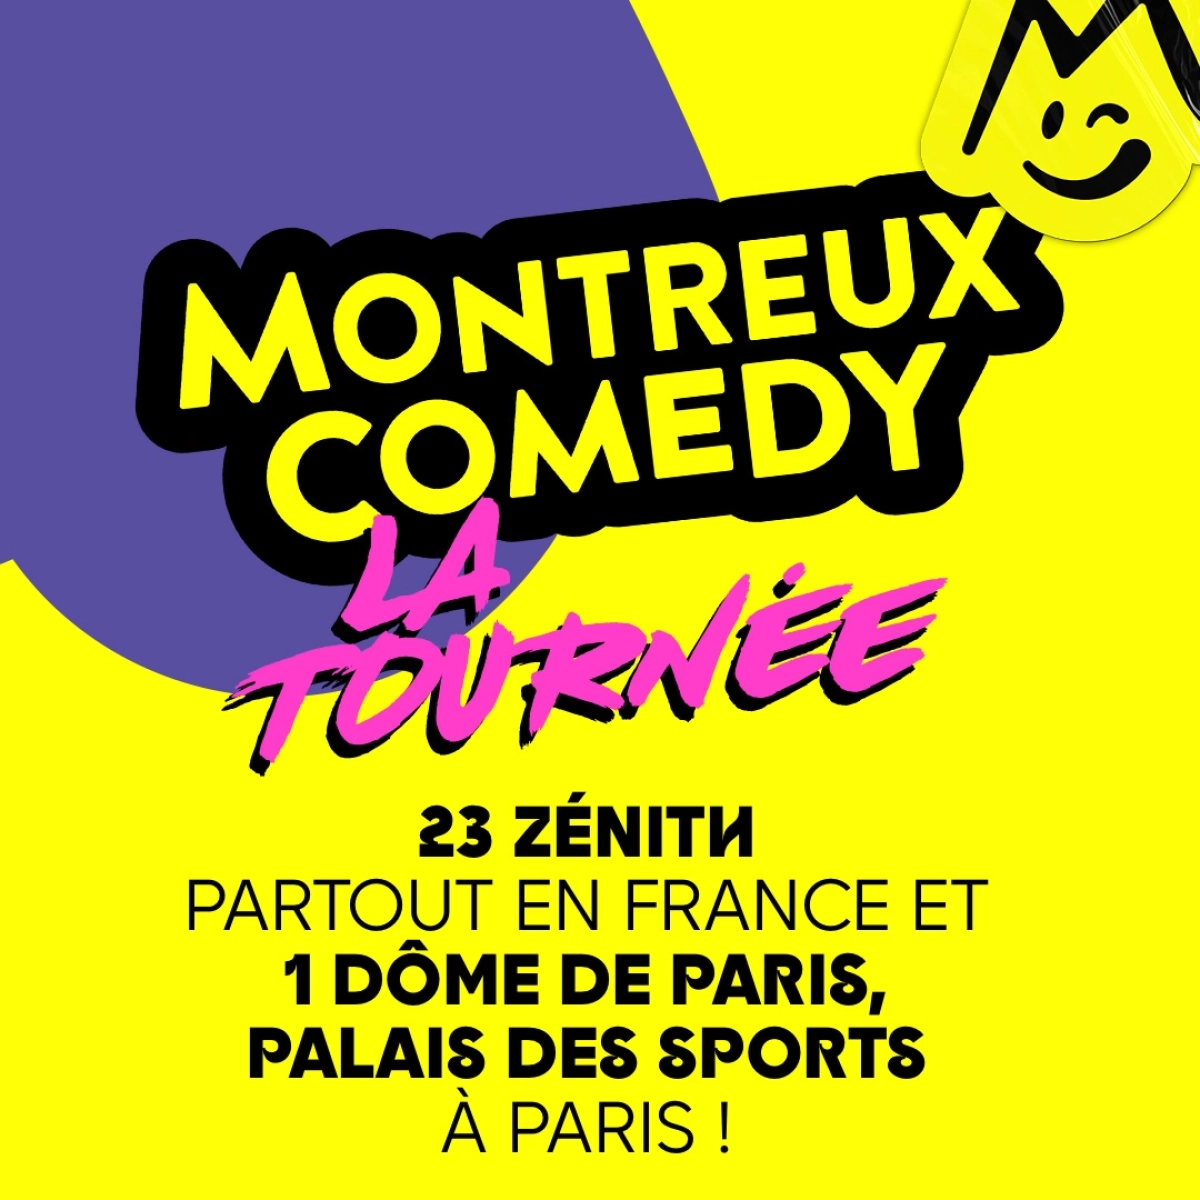 Montreux Comedy - La Tournee al Les Arenes de Metz Tickets